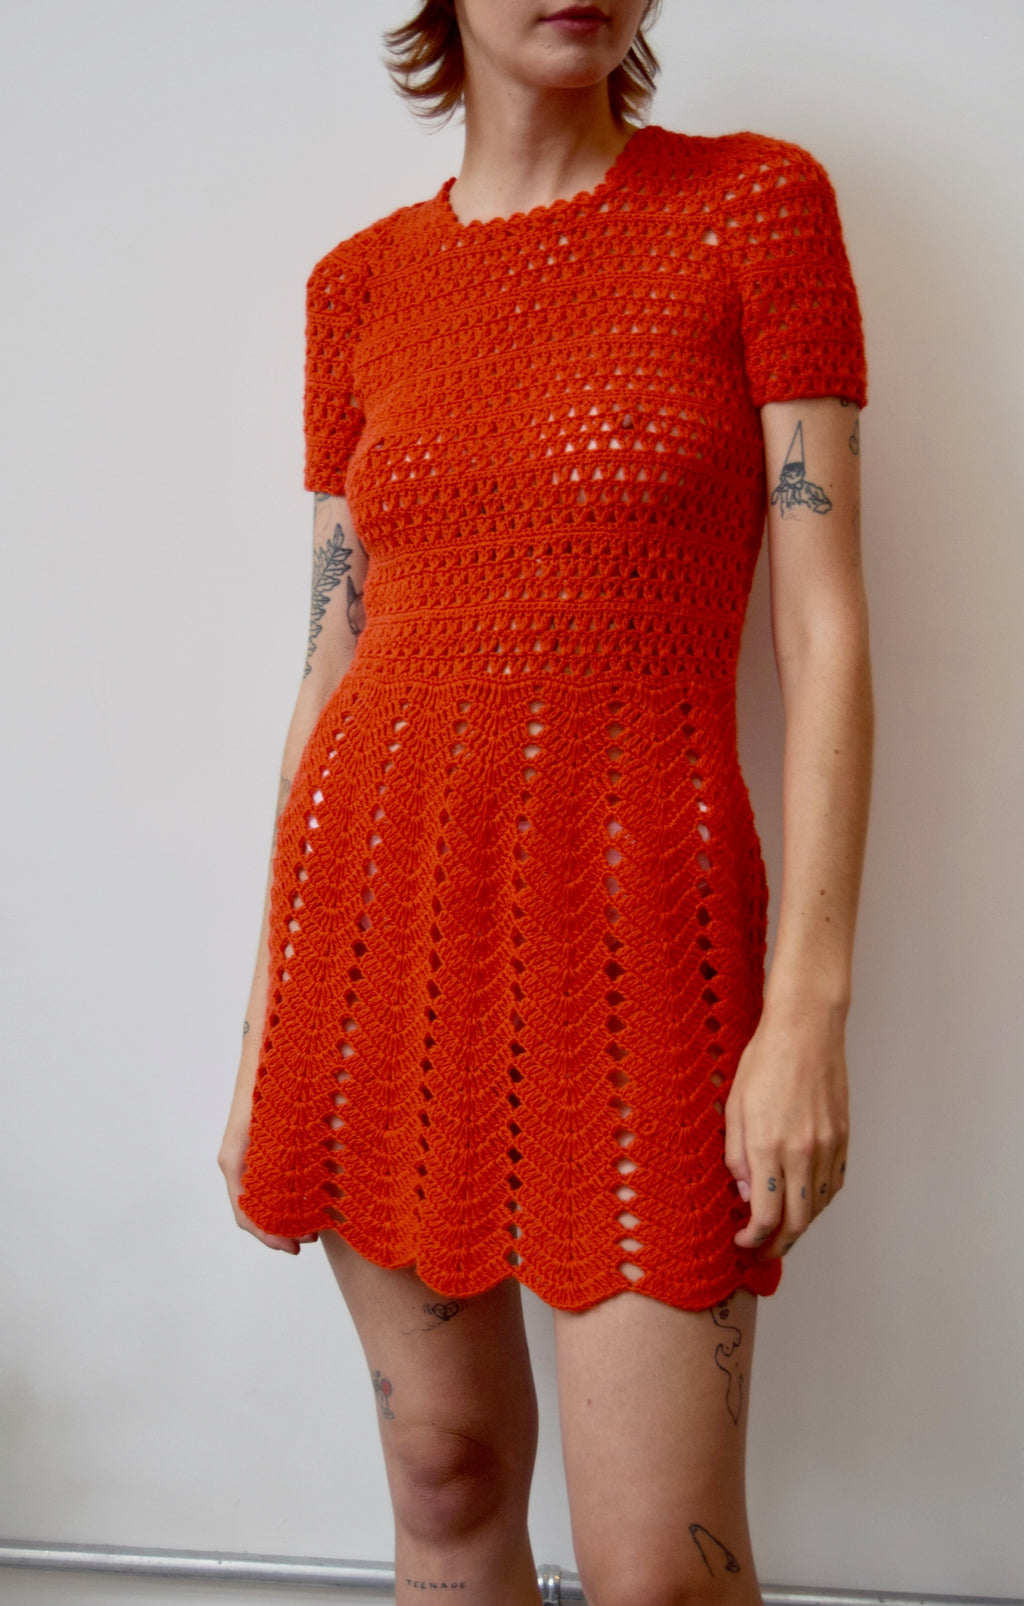 Tangerine Knit Dress